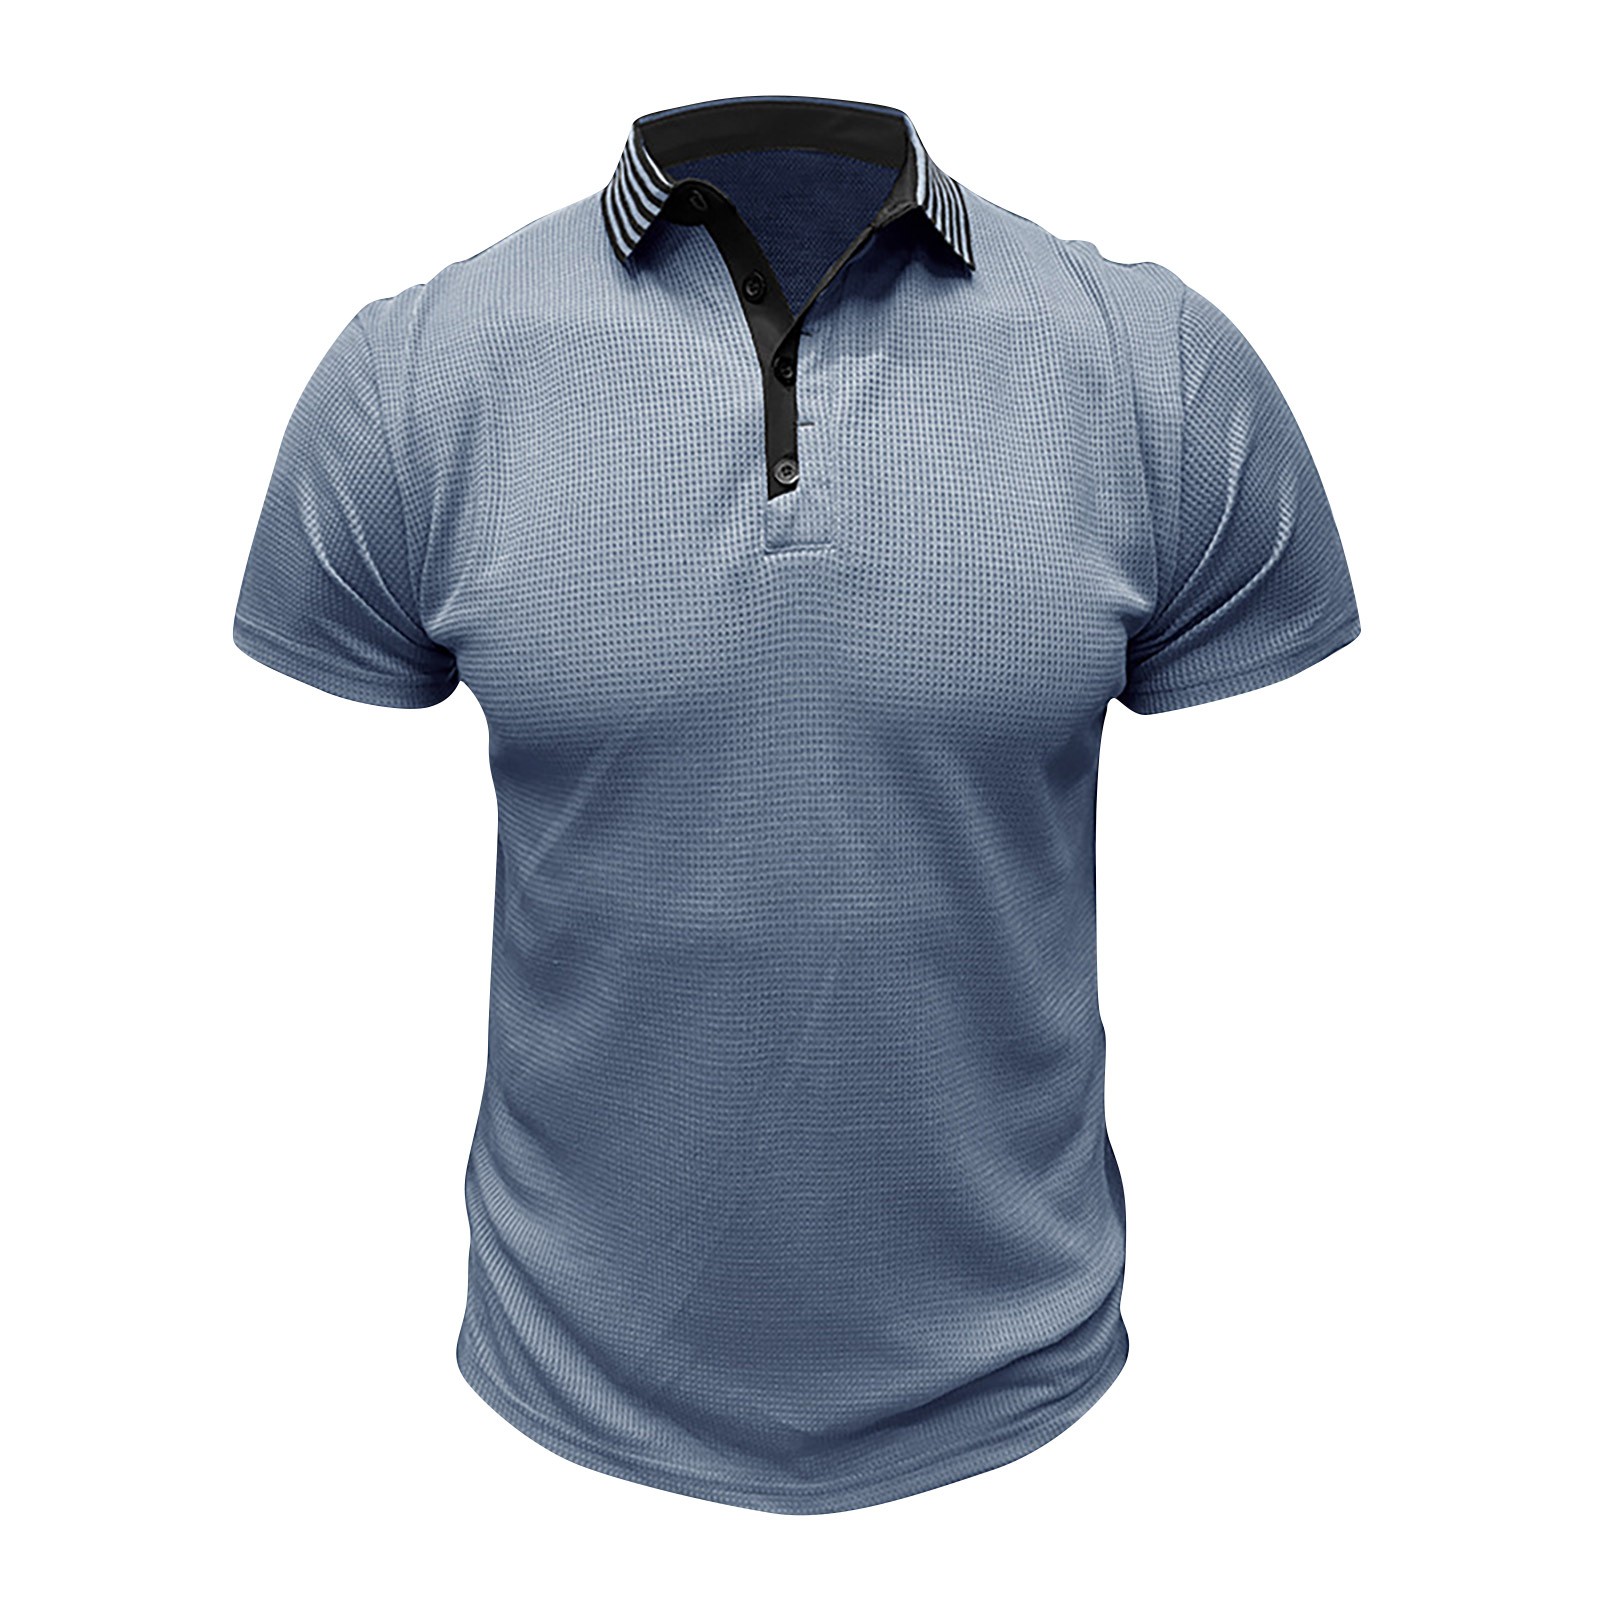 Biziza Men's Golf Polo Shirts UPF 50+ Tennis Athletic Men's Short ...